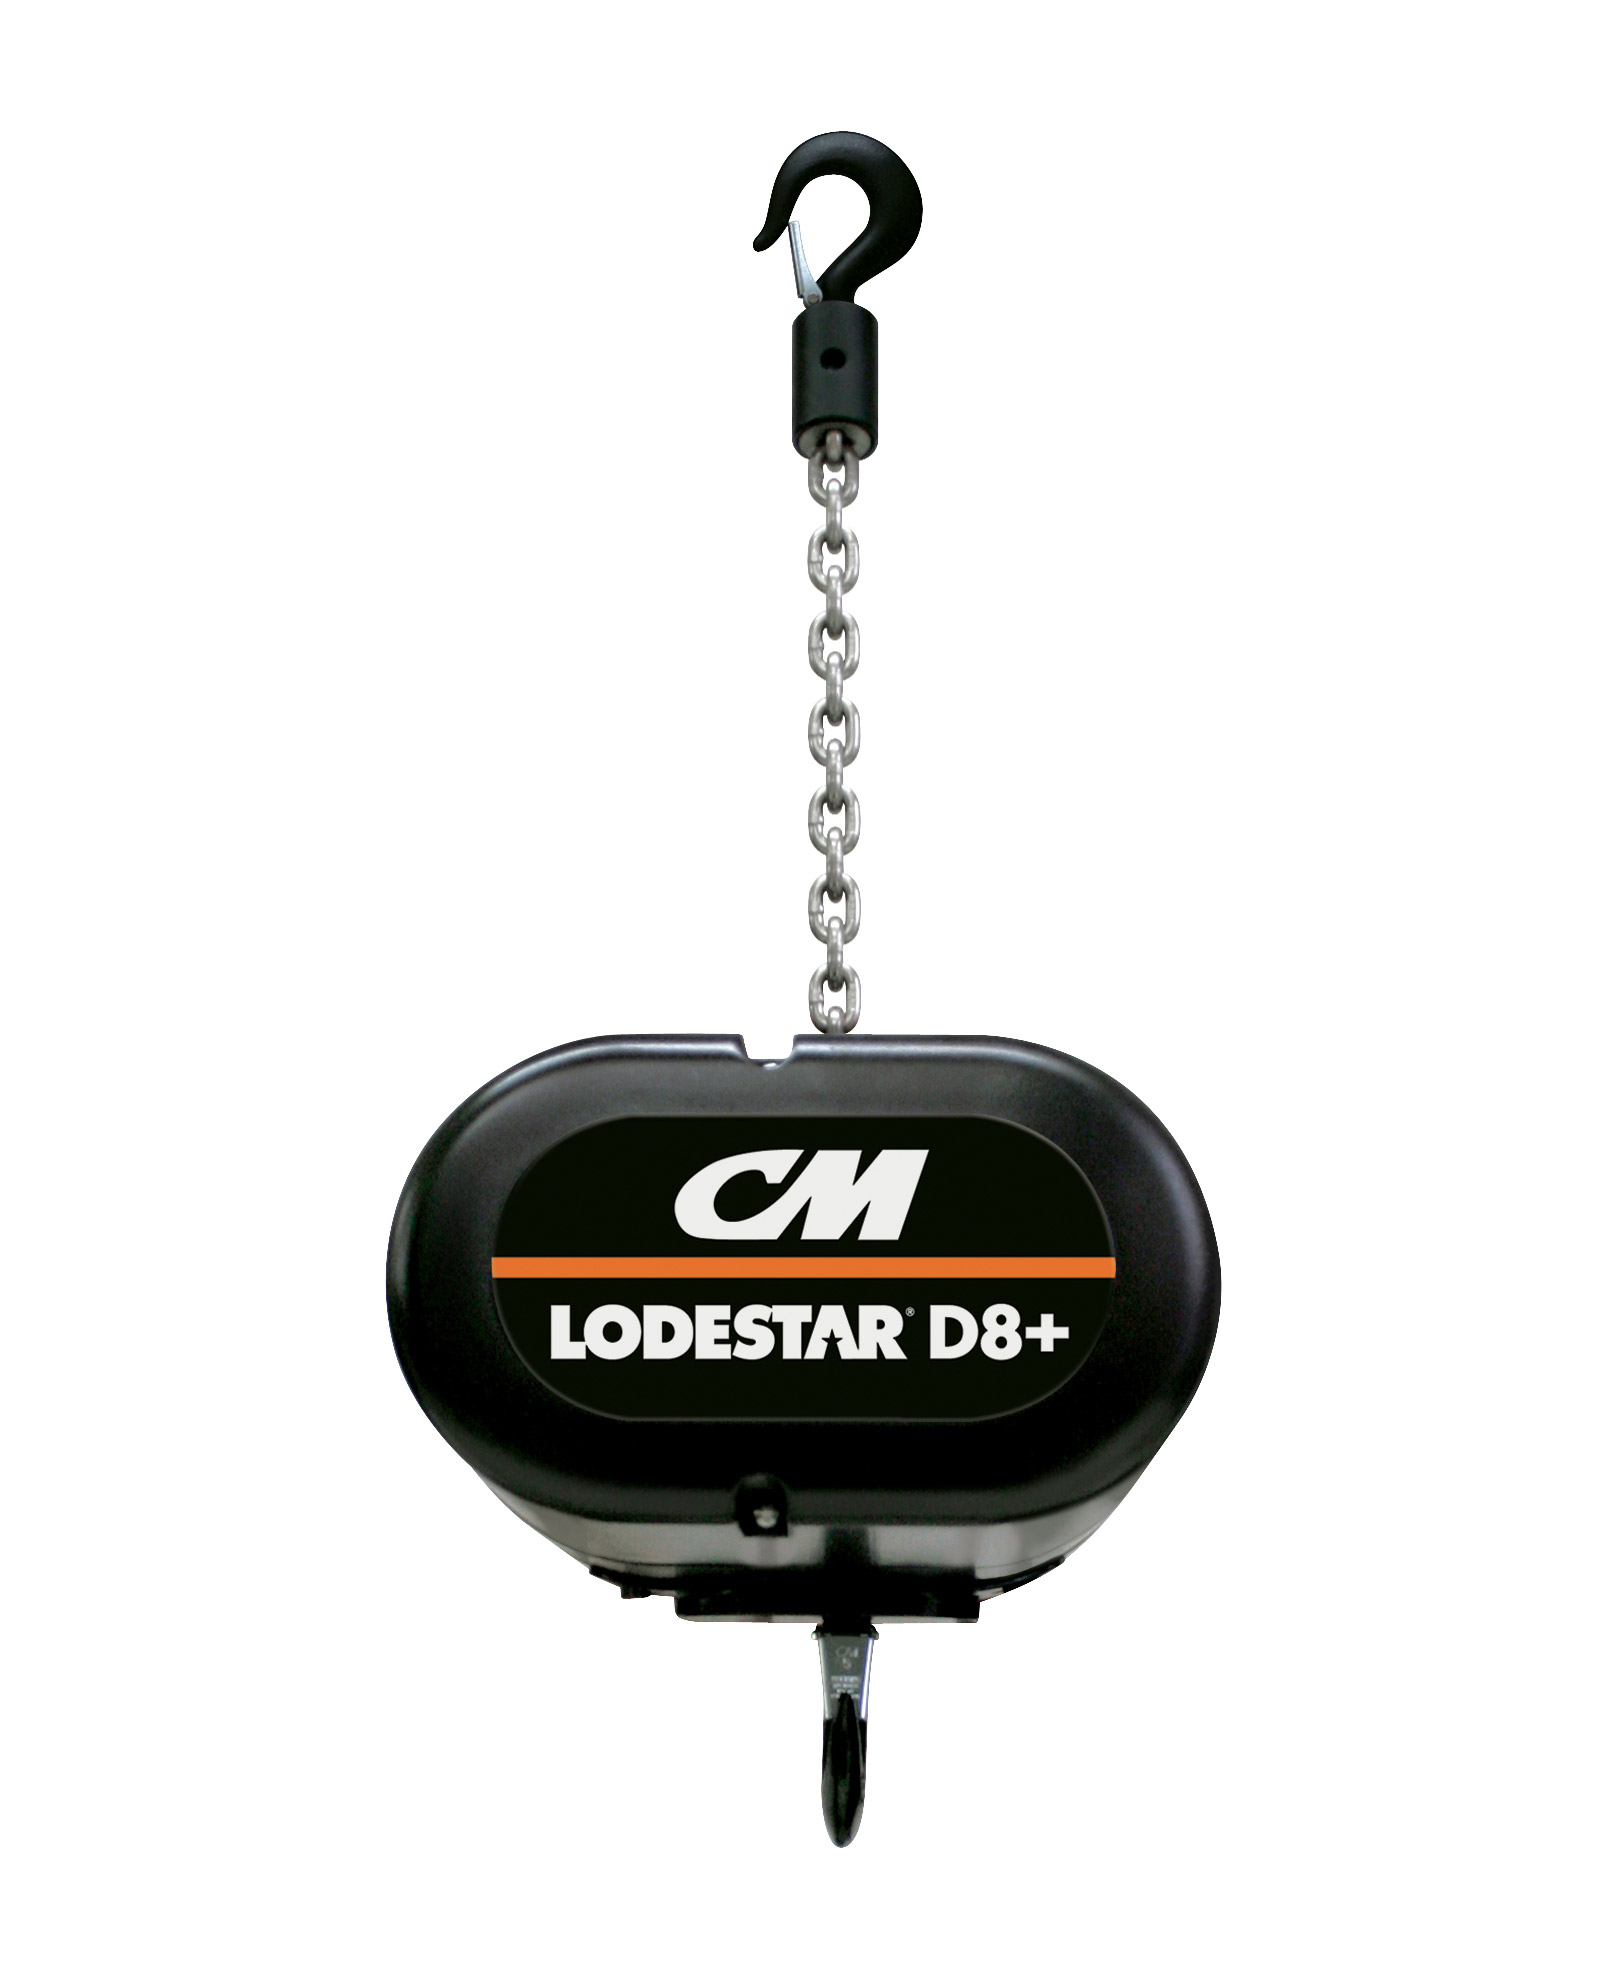 Cm Lodestar D8+ Chain Motor